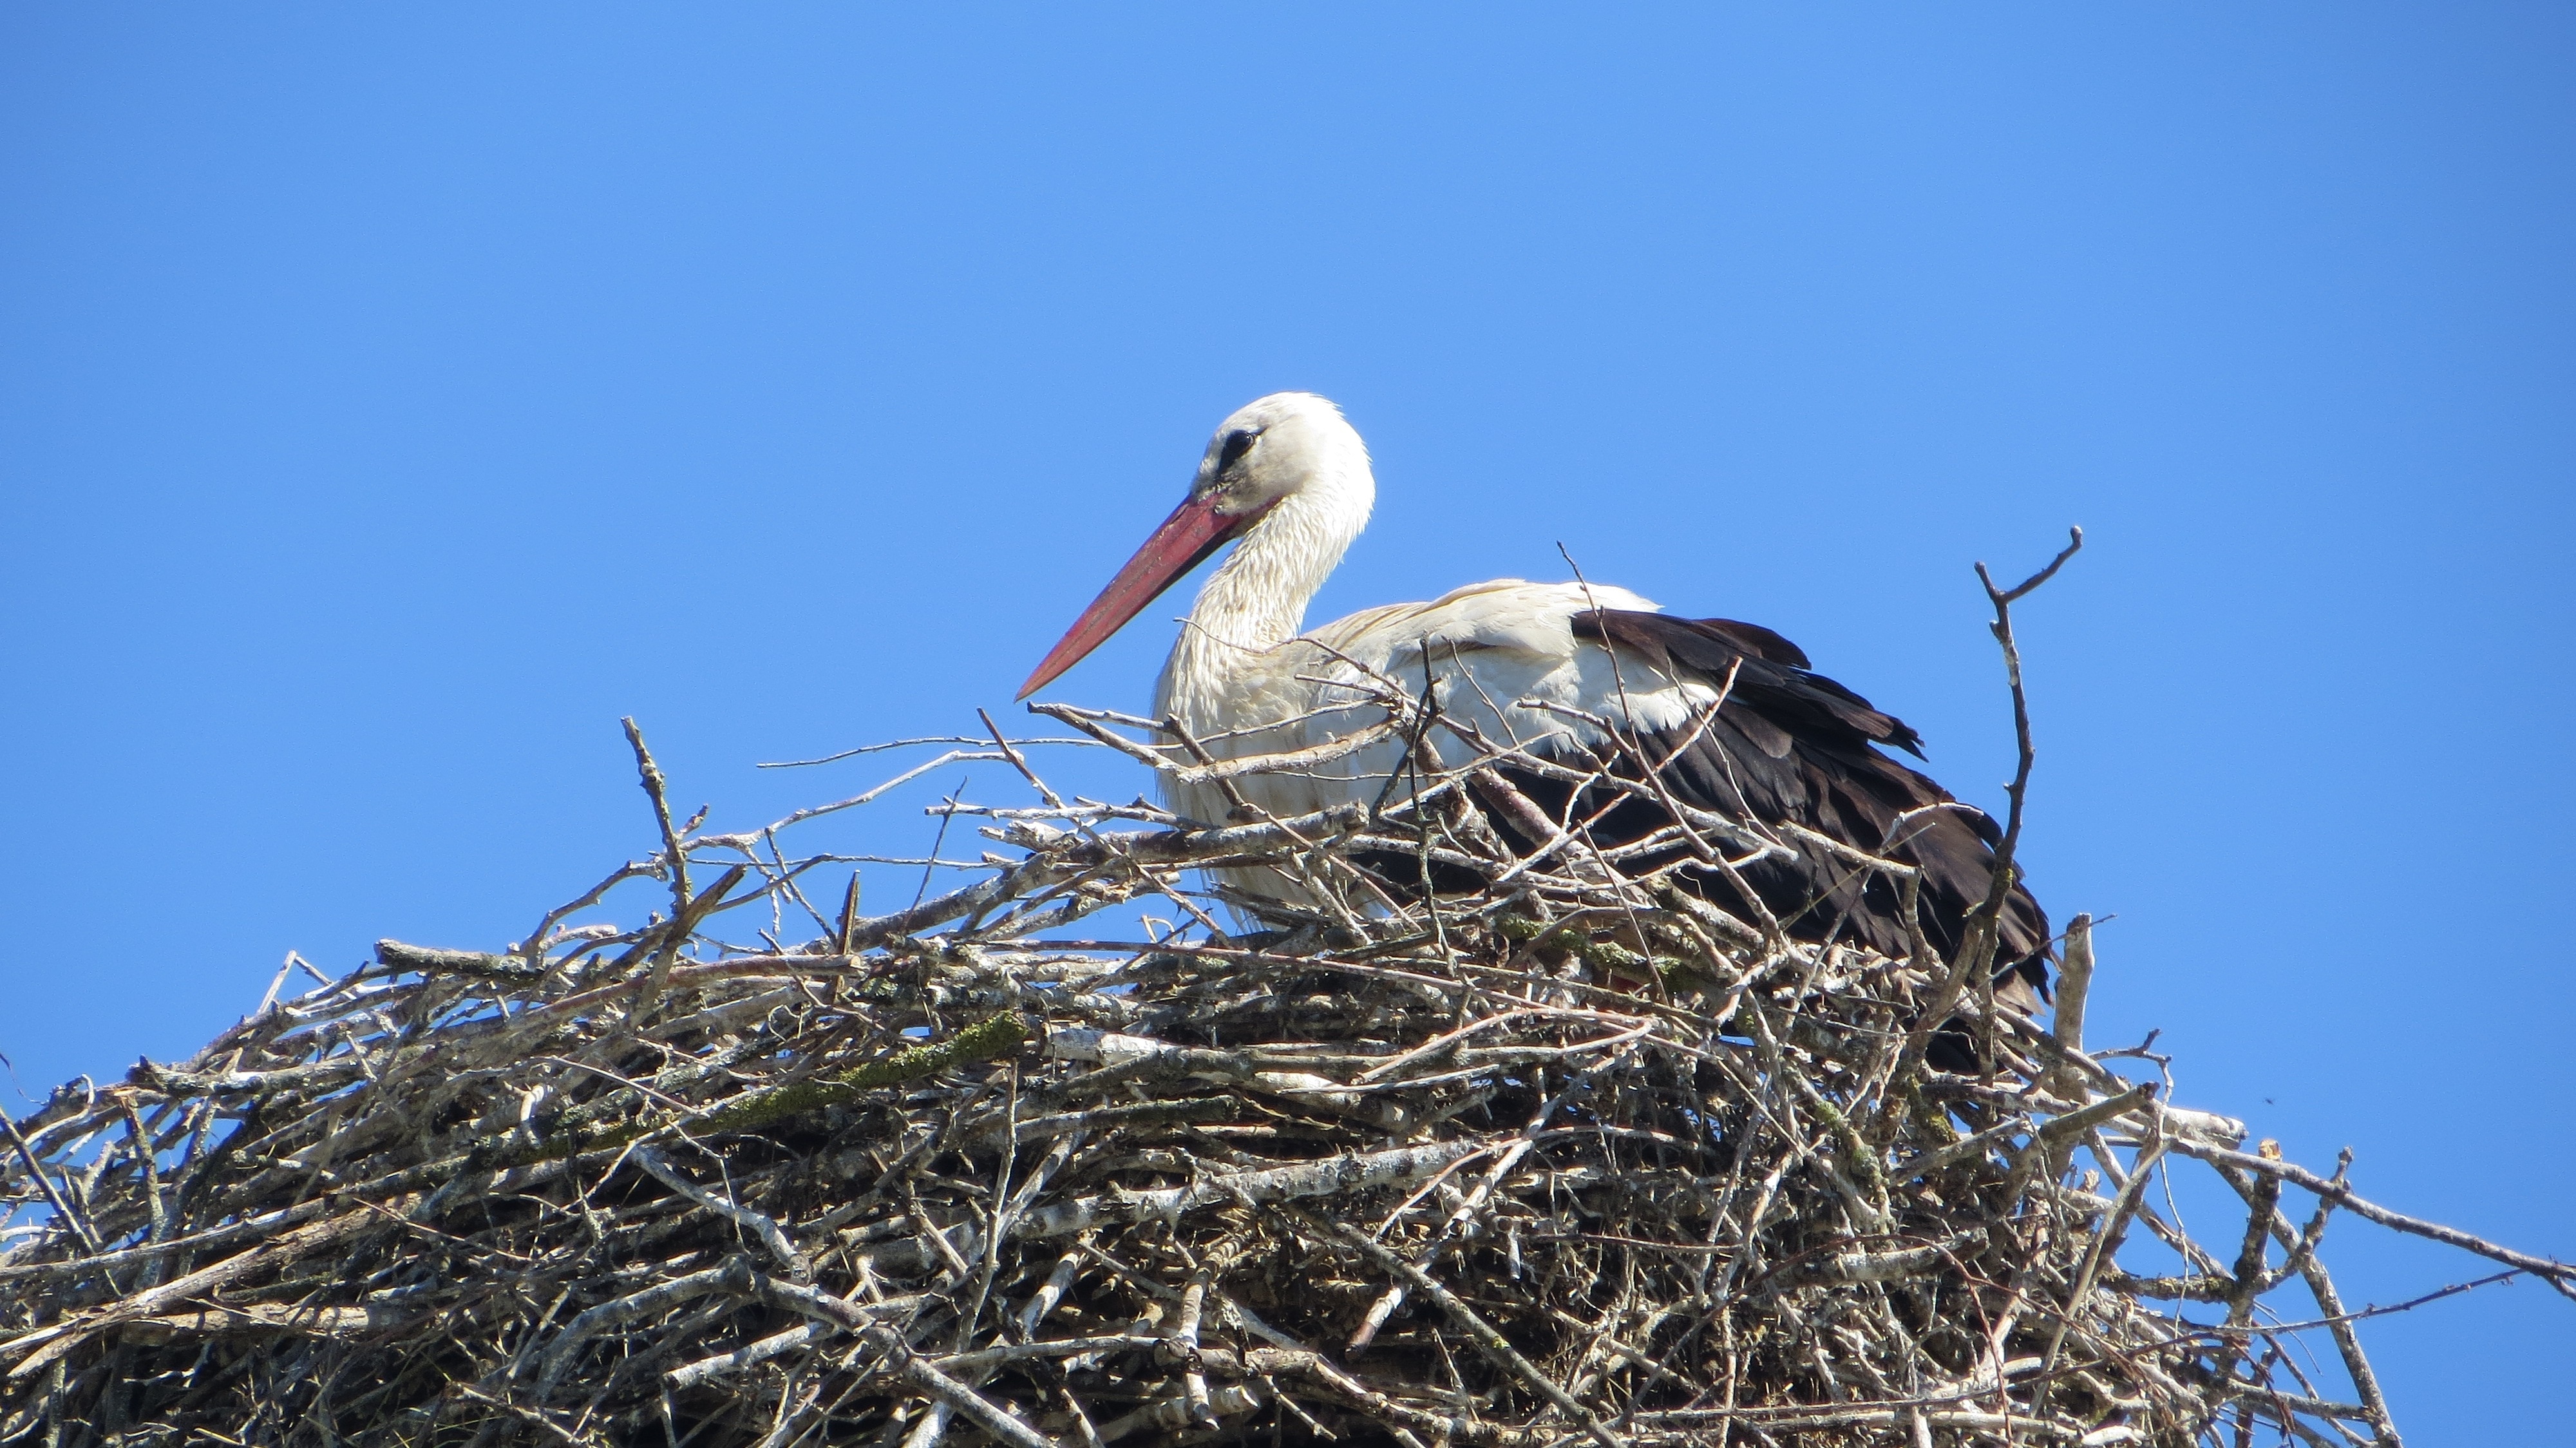 white and black bird on nest during daytime